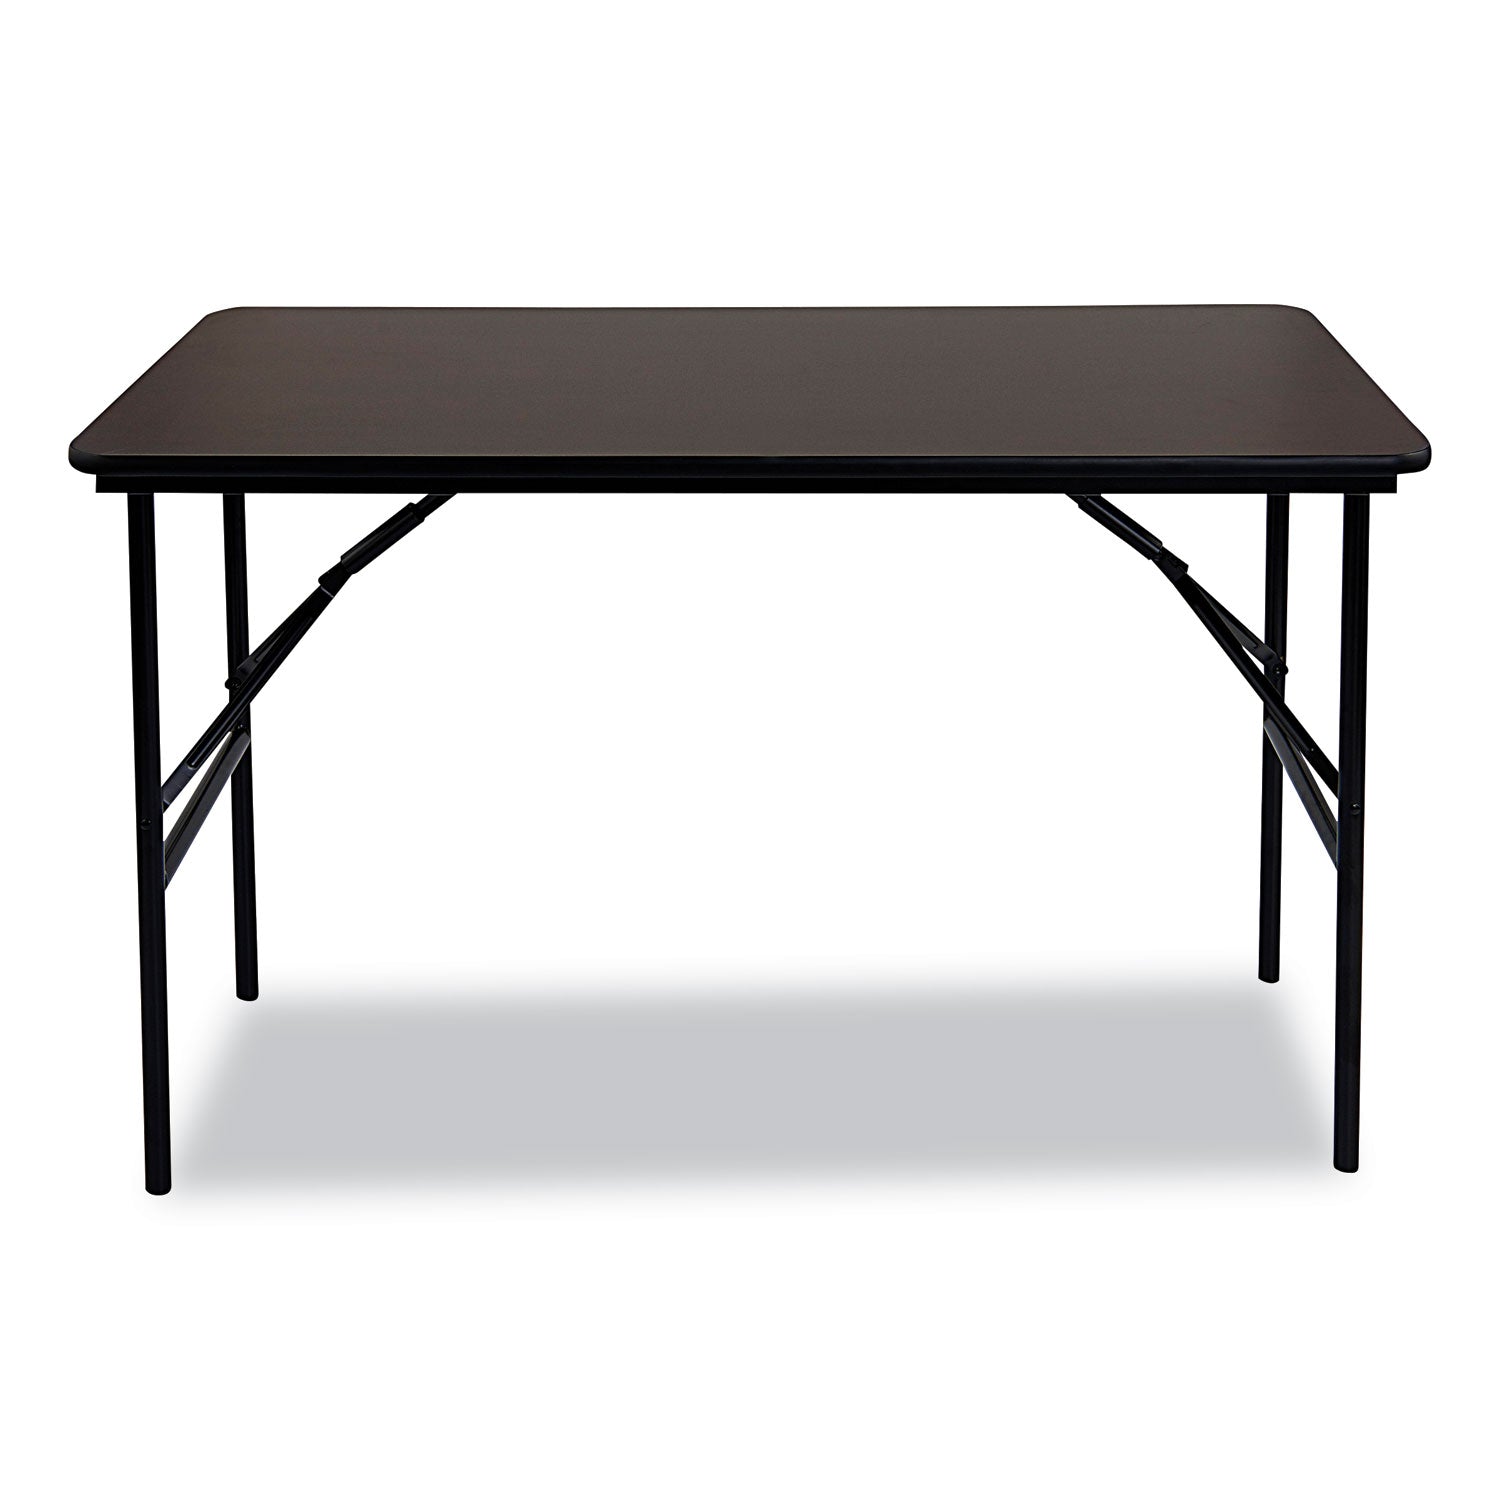 OfficeWorks Classic Wood-Laminate Folding Table, Straight Legs, Rectangular, 48" x 24" x 29", Walnut - 